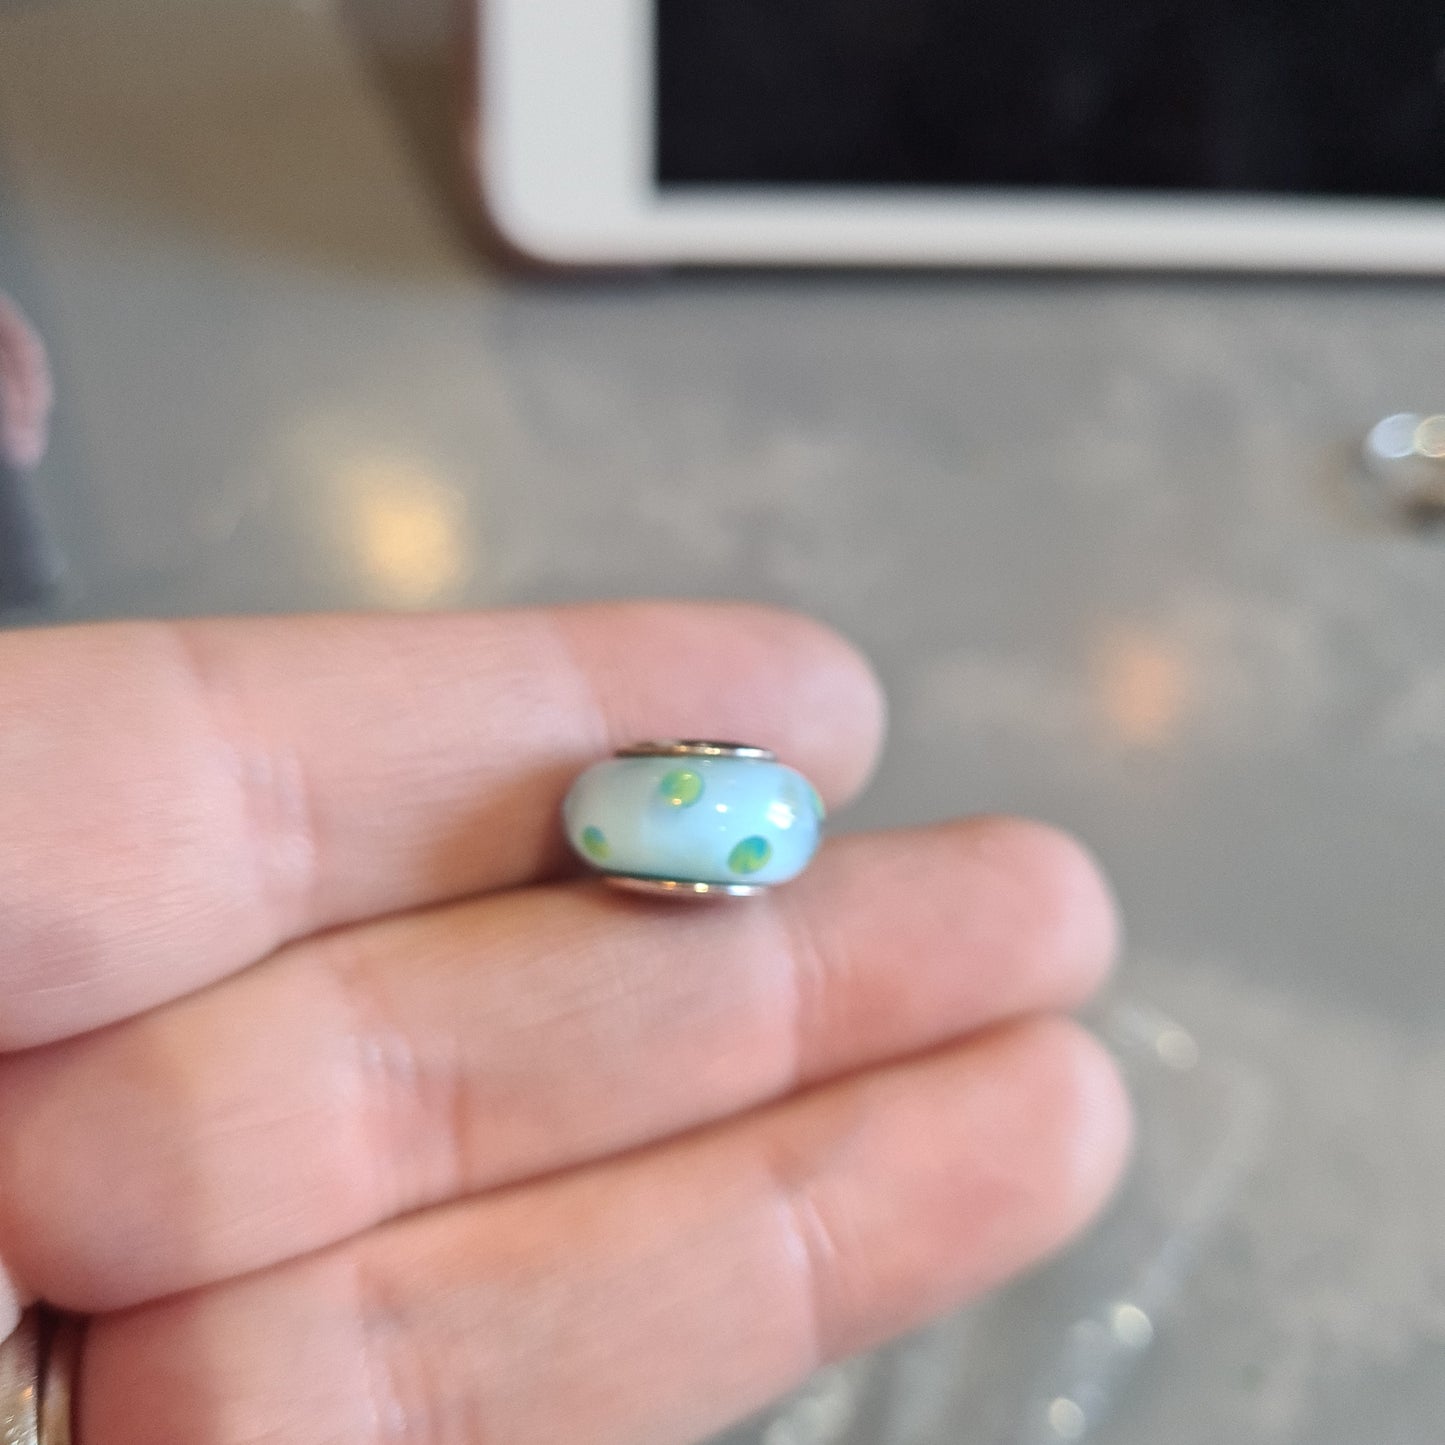 Genuine Pandora Murano Glass Charms Spotty Polka Dot Blue and Green